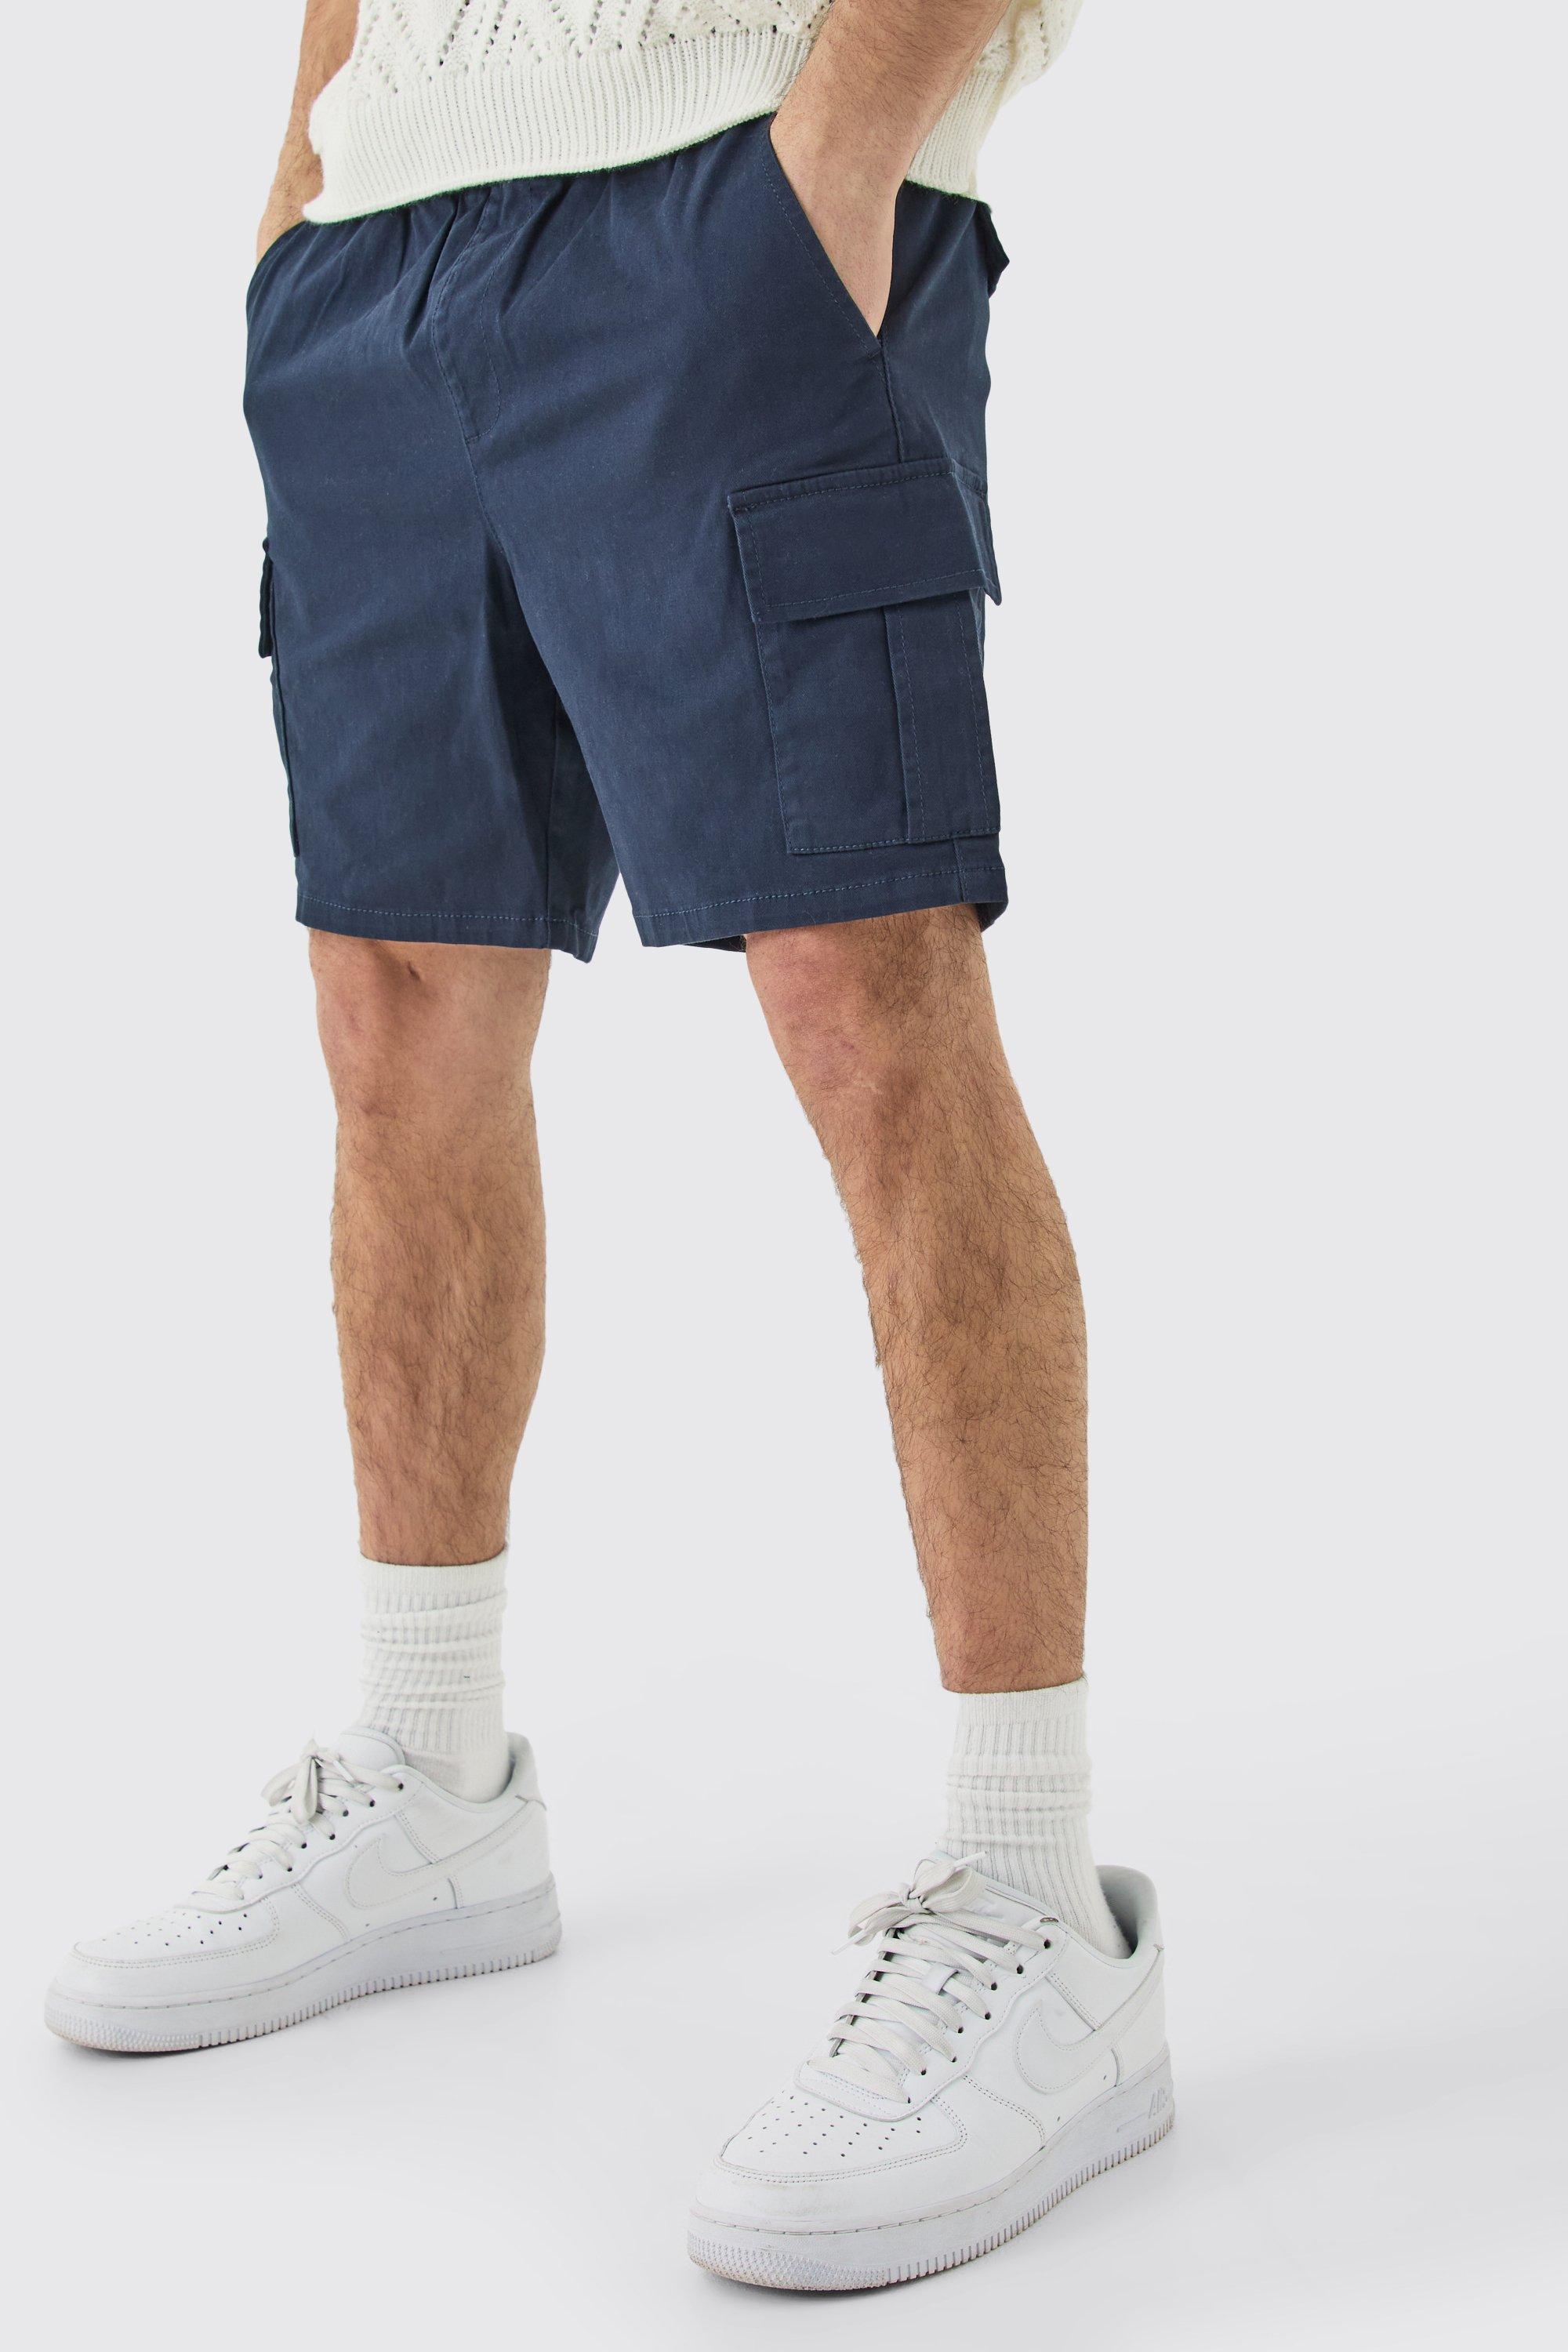 Image of Elastic Waist Navy Slim Fit Cargo Shorts, Navy